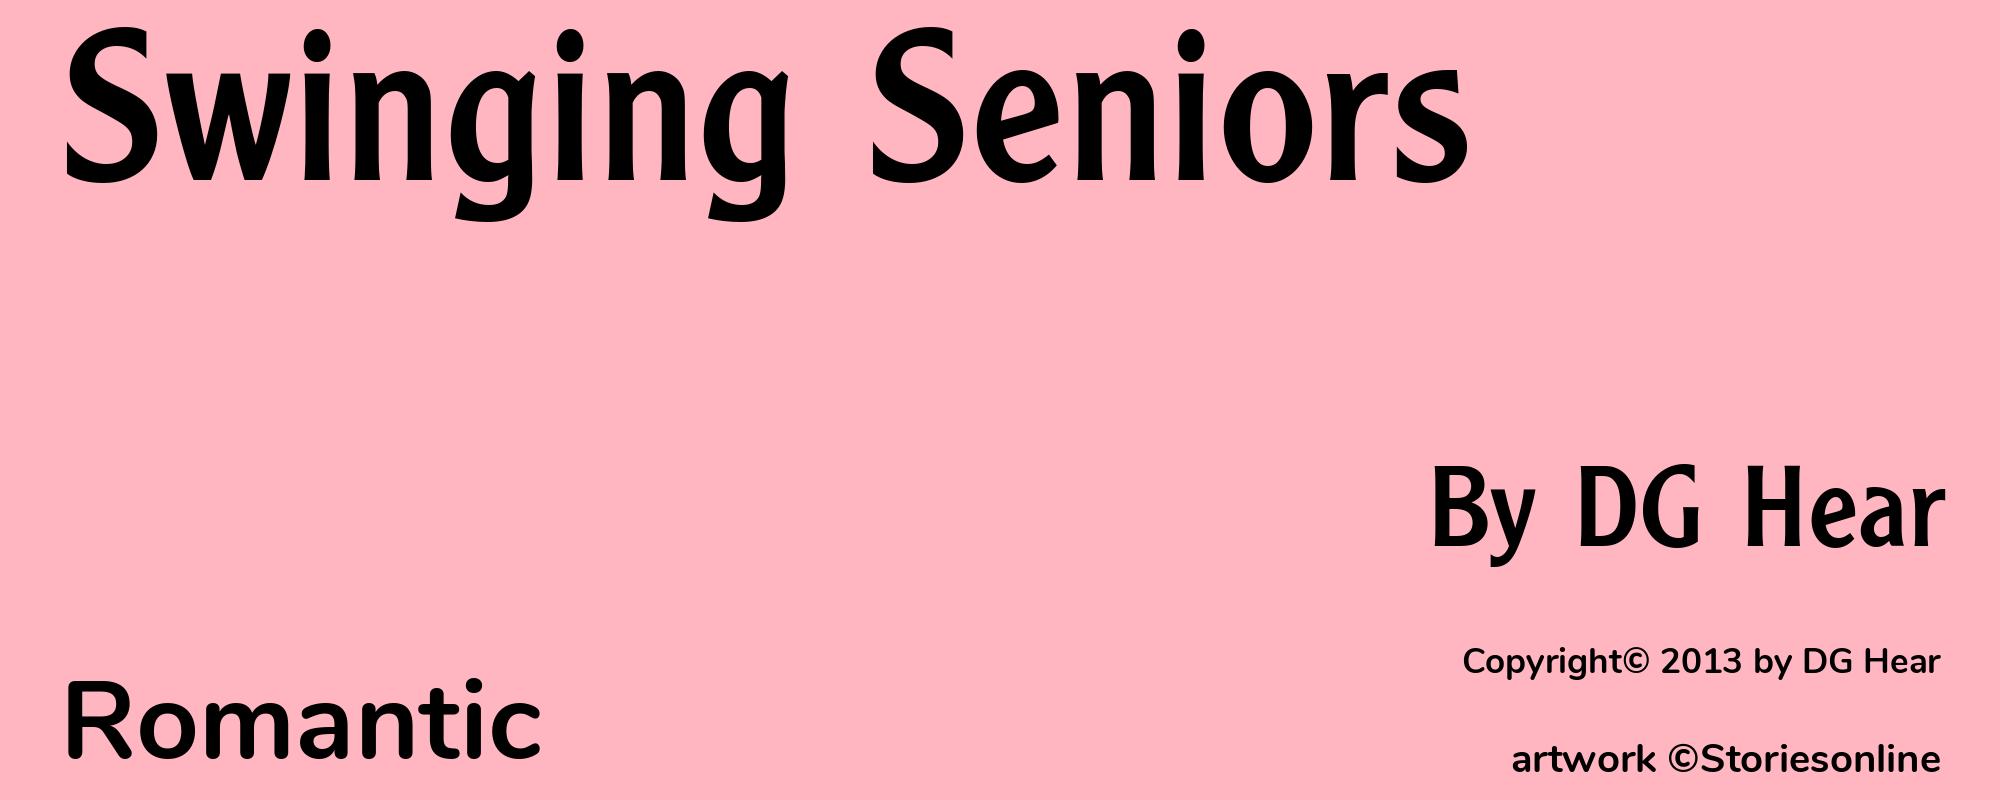 Swinging Seniors - Cover